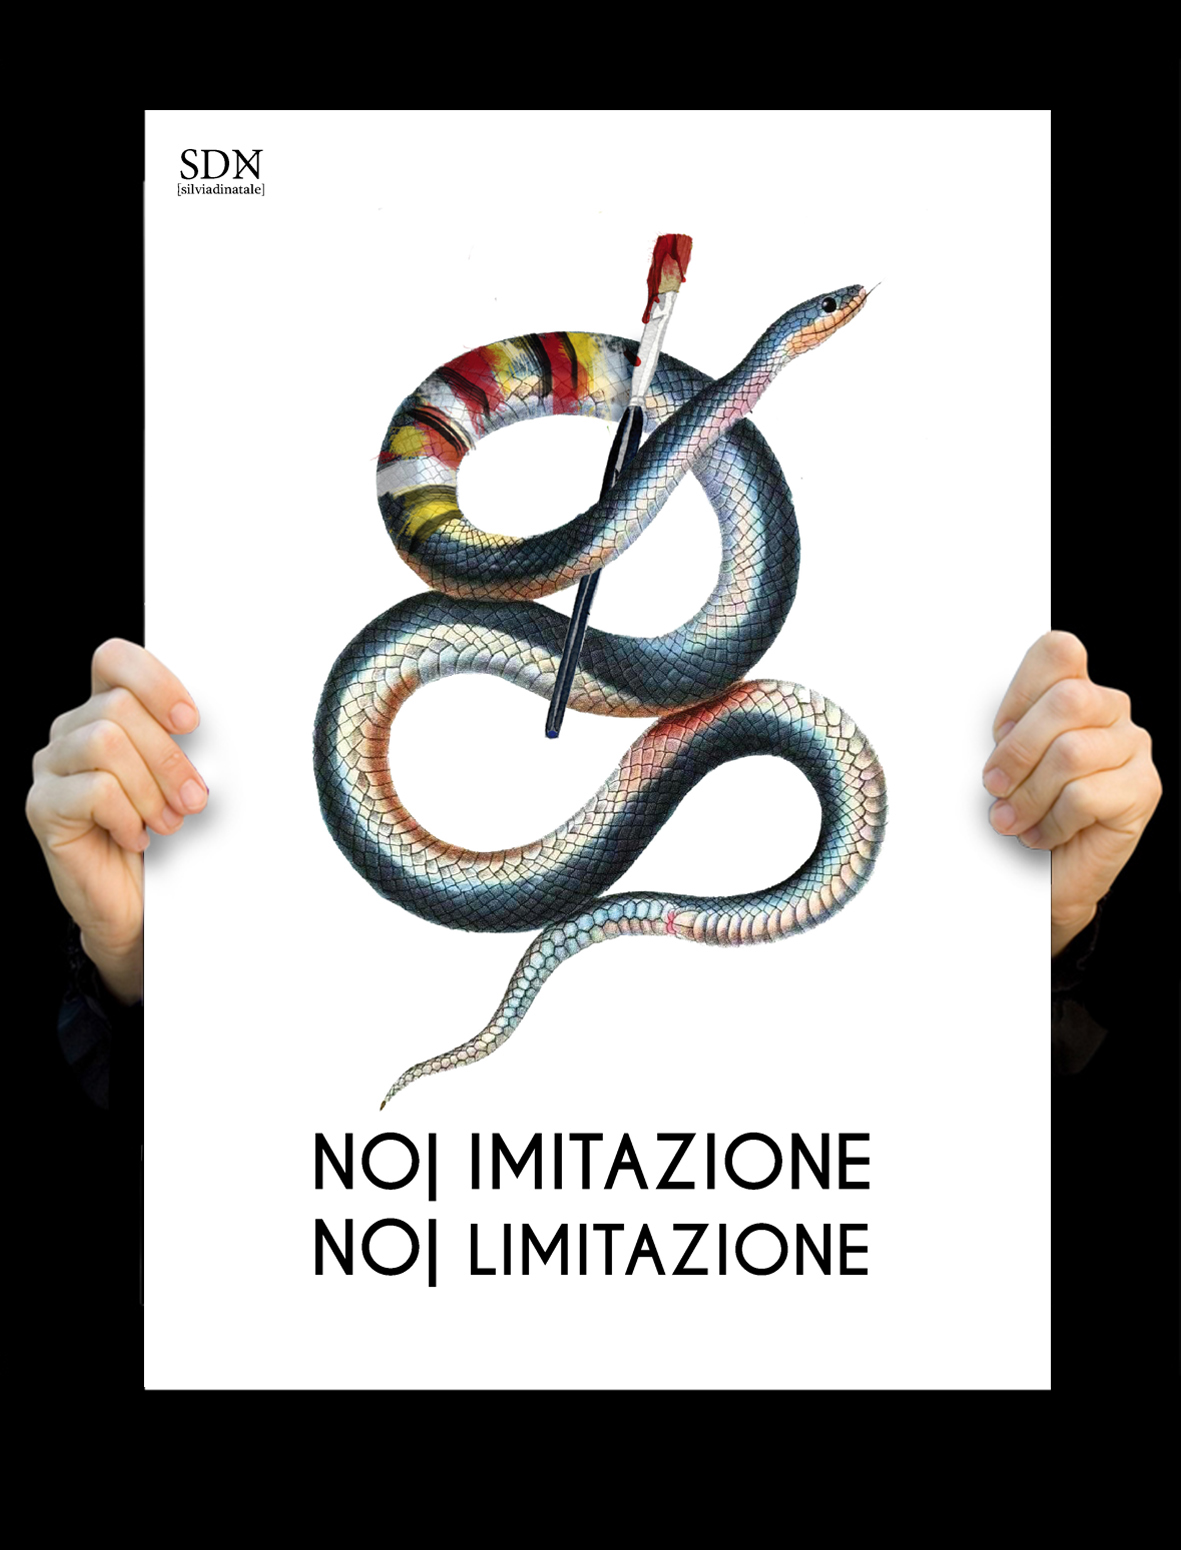 posters animal ideas italian InDesign Illustrator photoshop adobe SDN silviadinatale graphic art